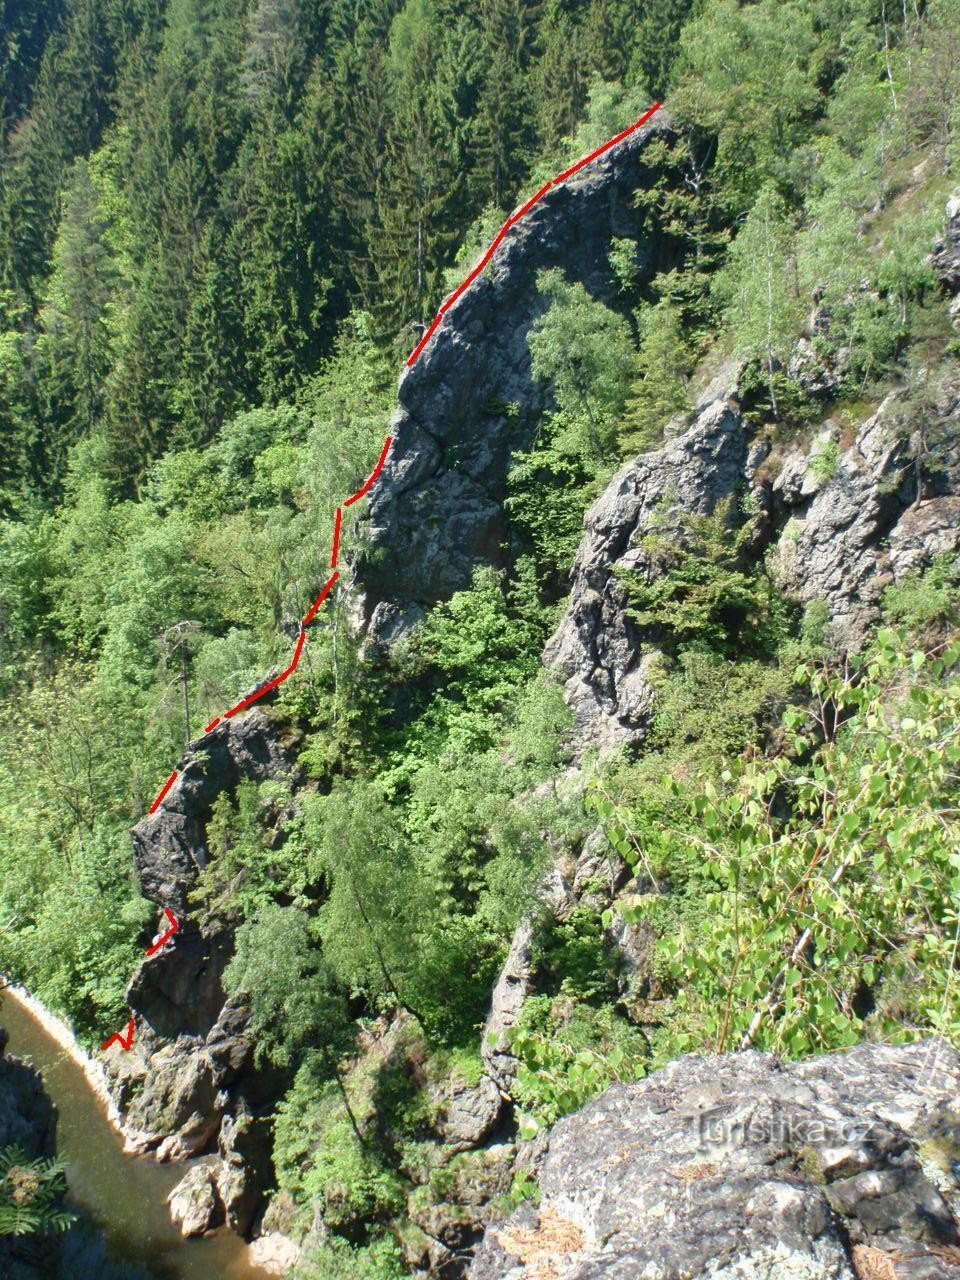 uitzicht op de rots; bron: www.lesycr.cz